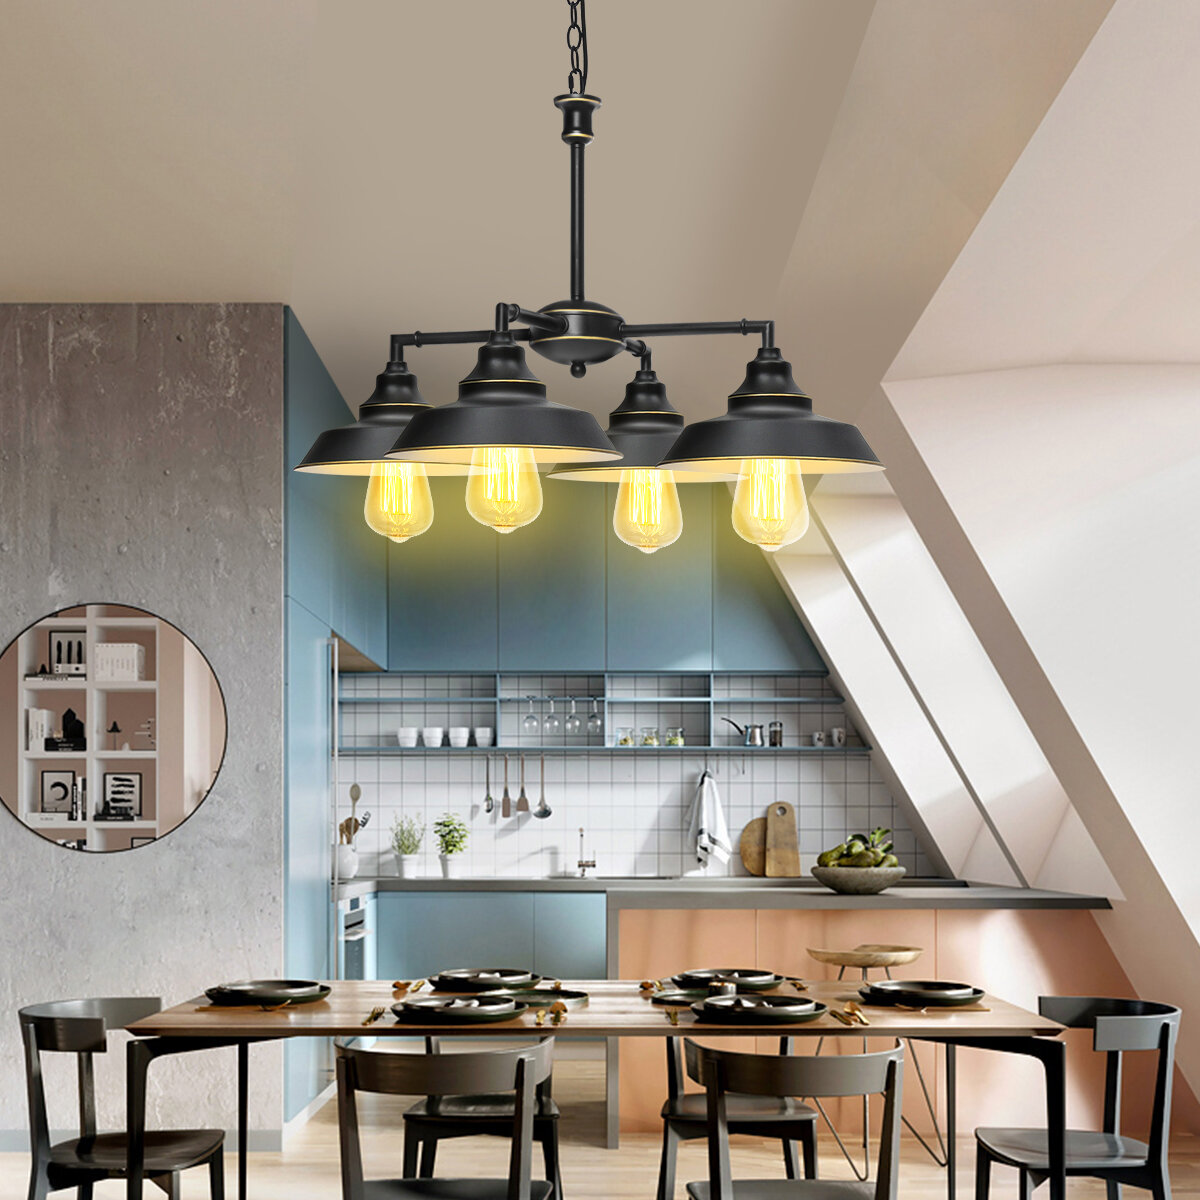 

E26 Industrial Metal Chandelier Pendant Light Indoor Home Bar Ceiling Lamp Fixture AC110V